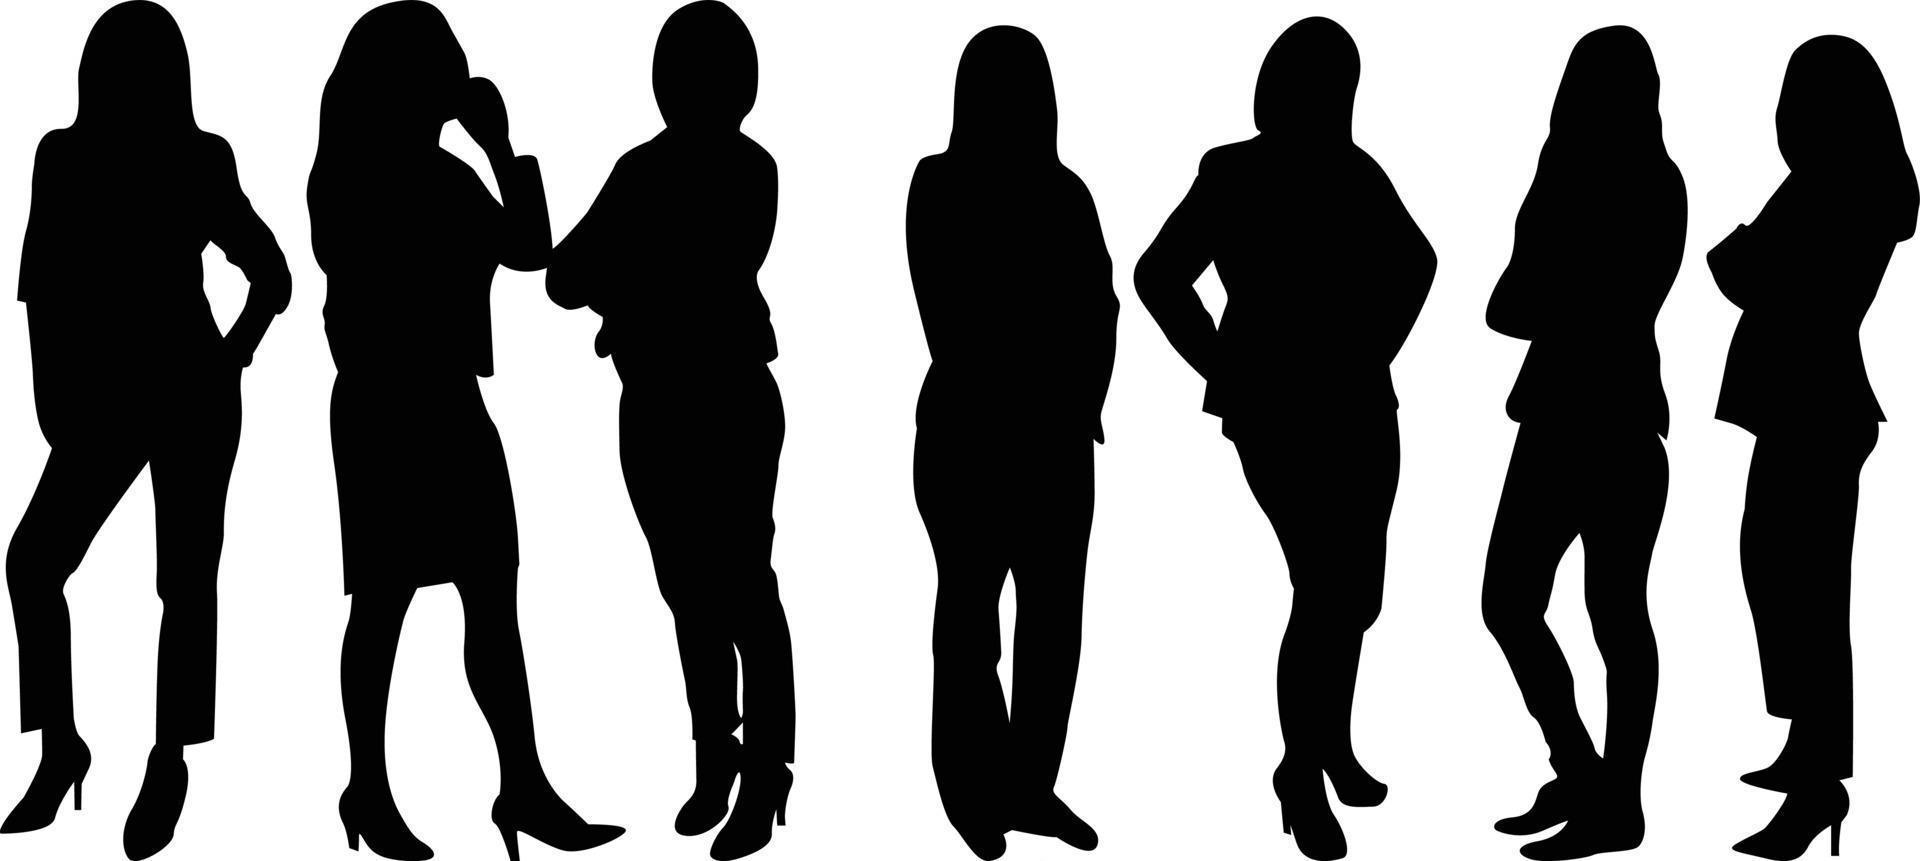 Business women silhouette vector